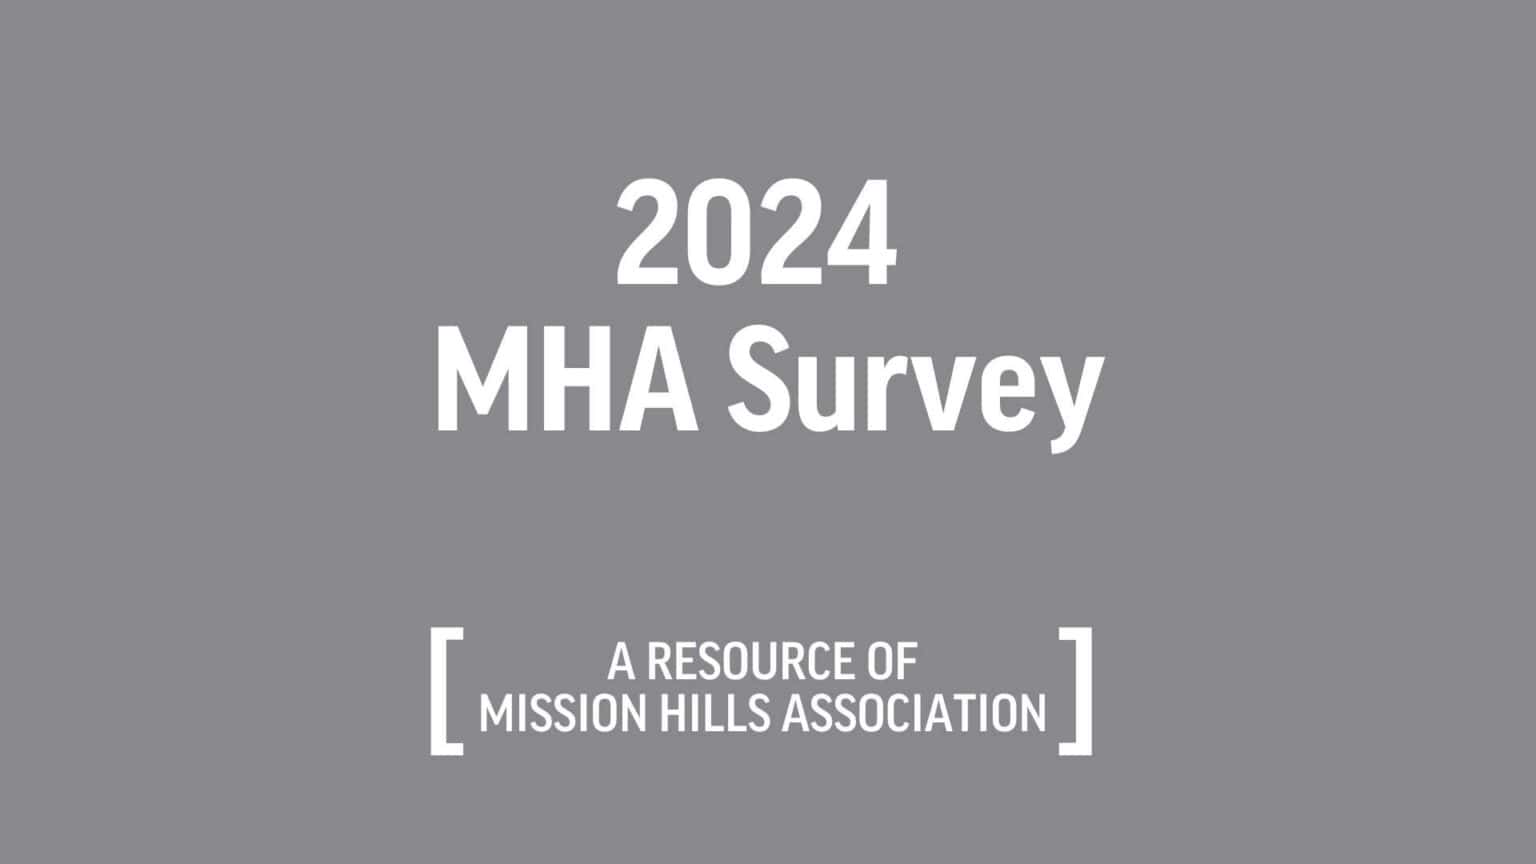 2024 Mission Hills Association Survey